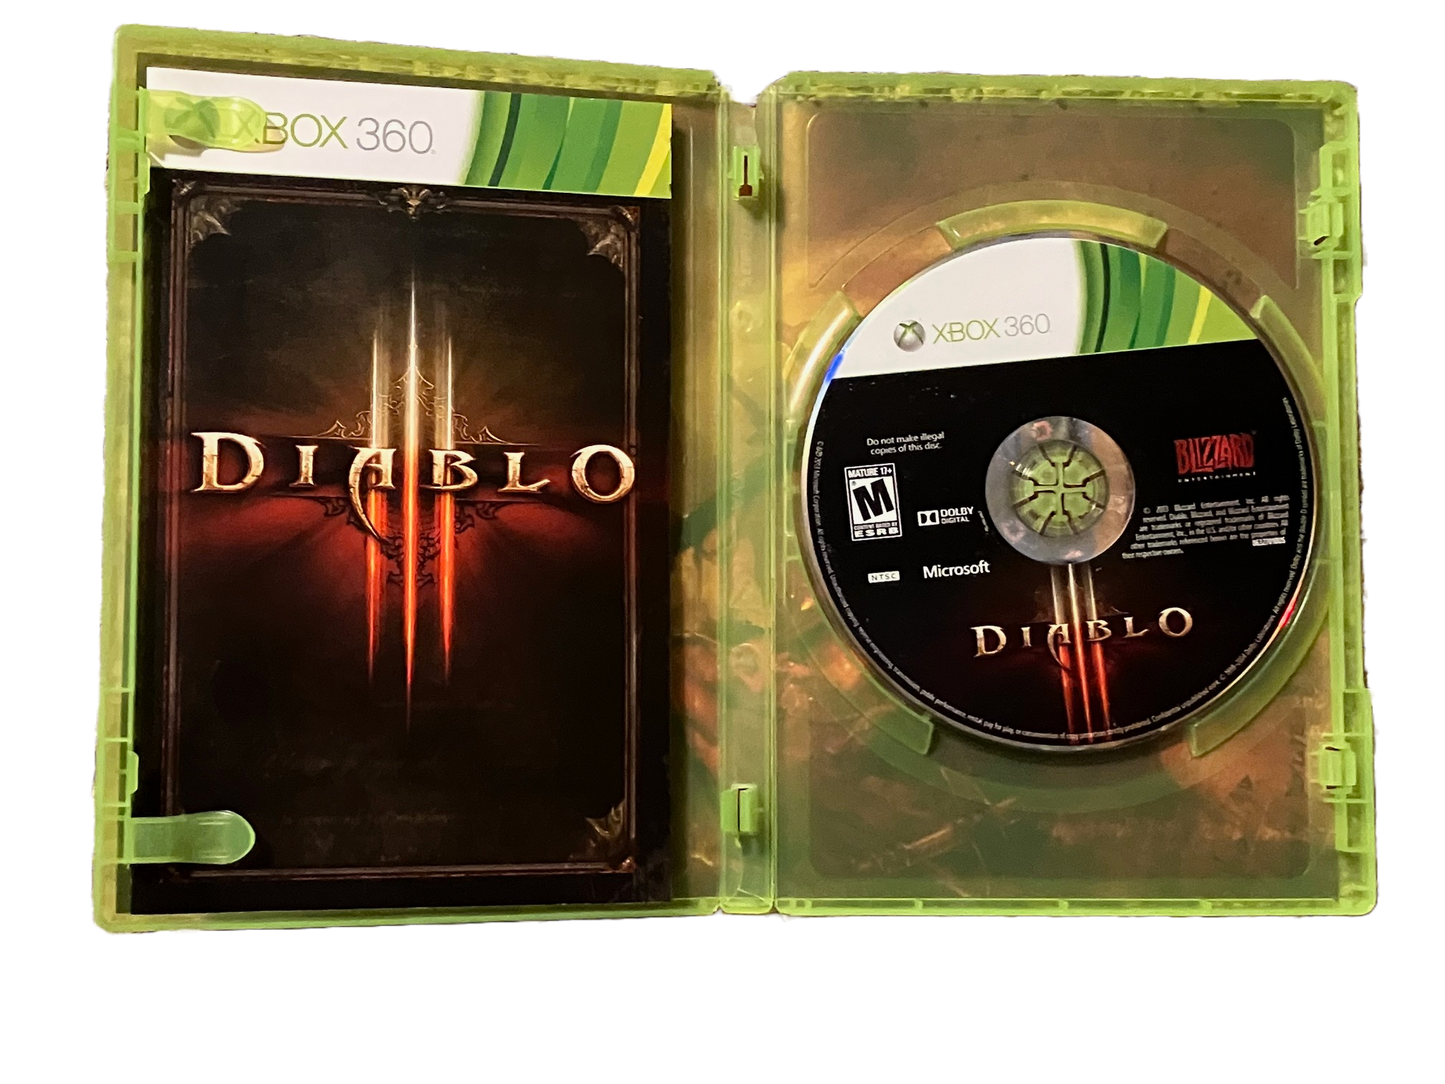 Diablo III Xbox 360. Complete